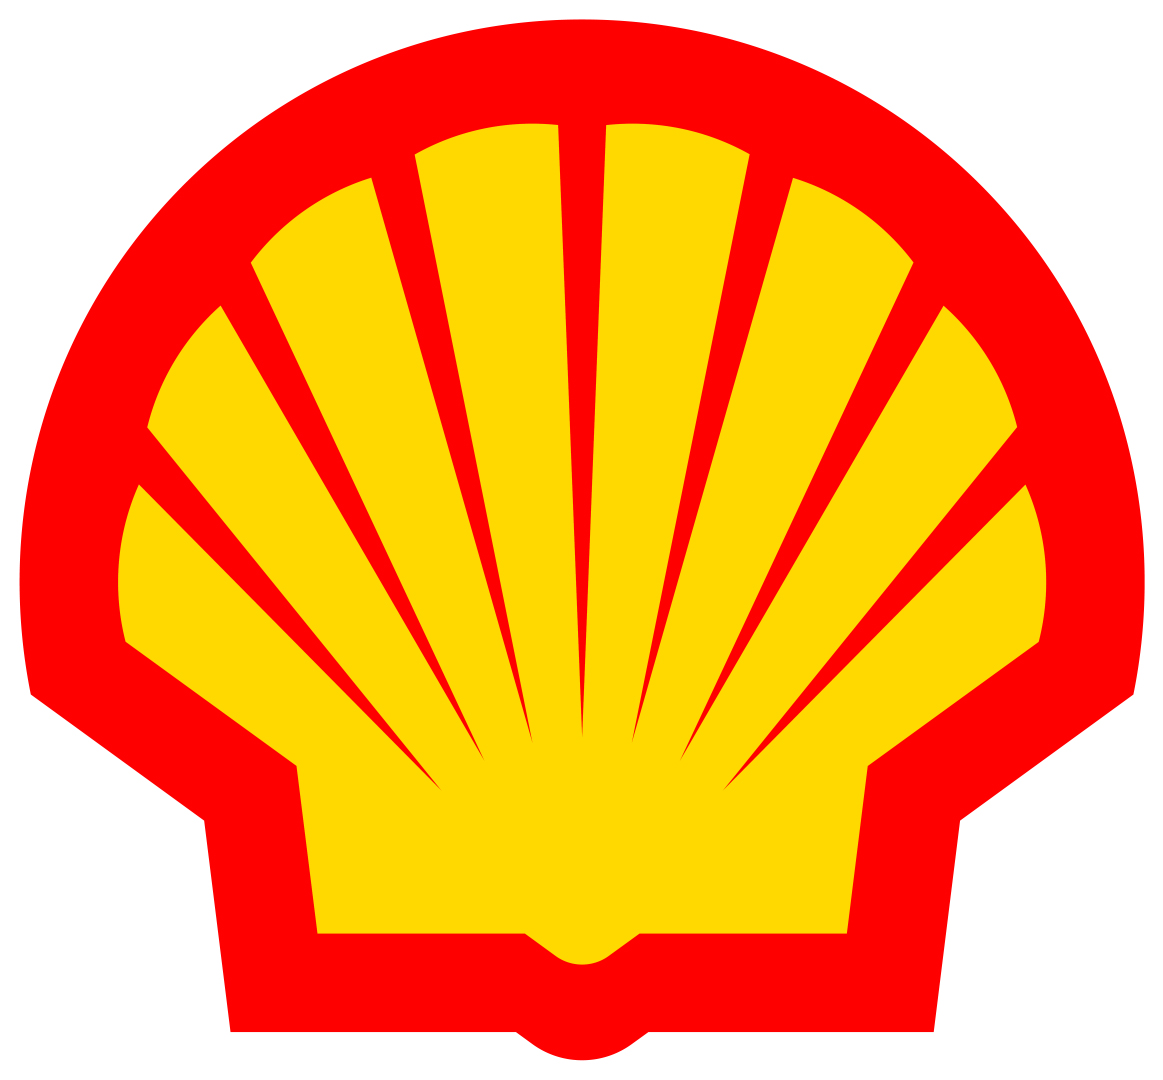 Shell-Logo-Rebuilding-Iraq.jpg